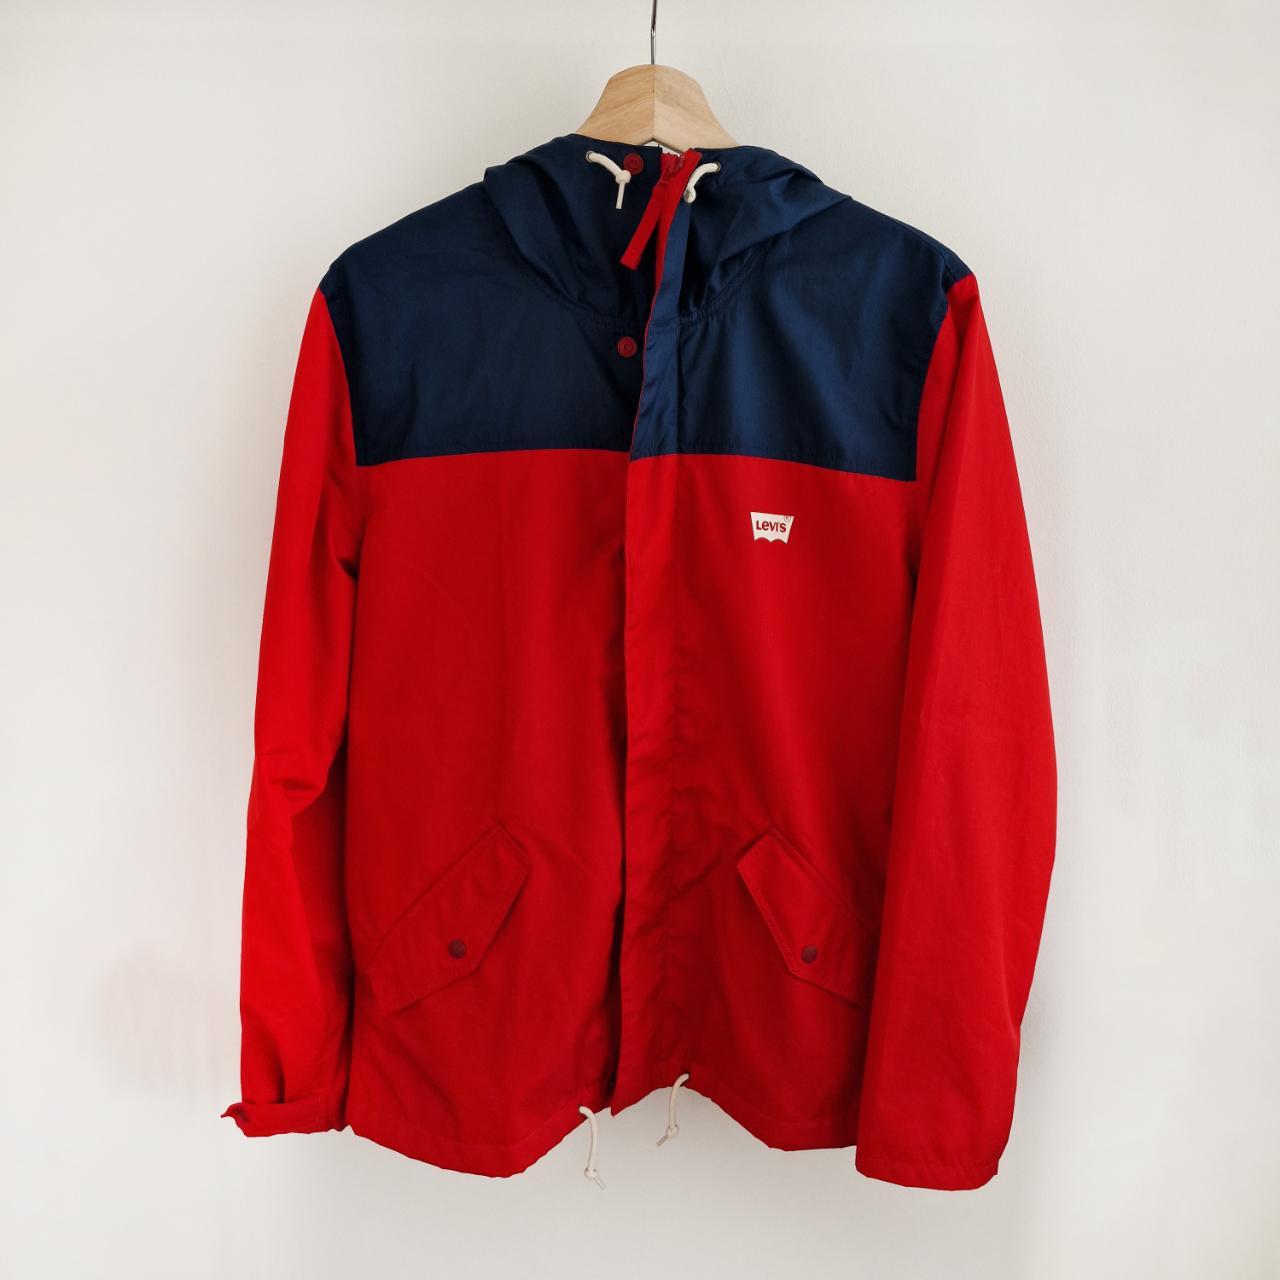 Vintage LEVI's Jacket - Windbreaker - 90's style -... - Depop